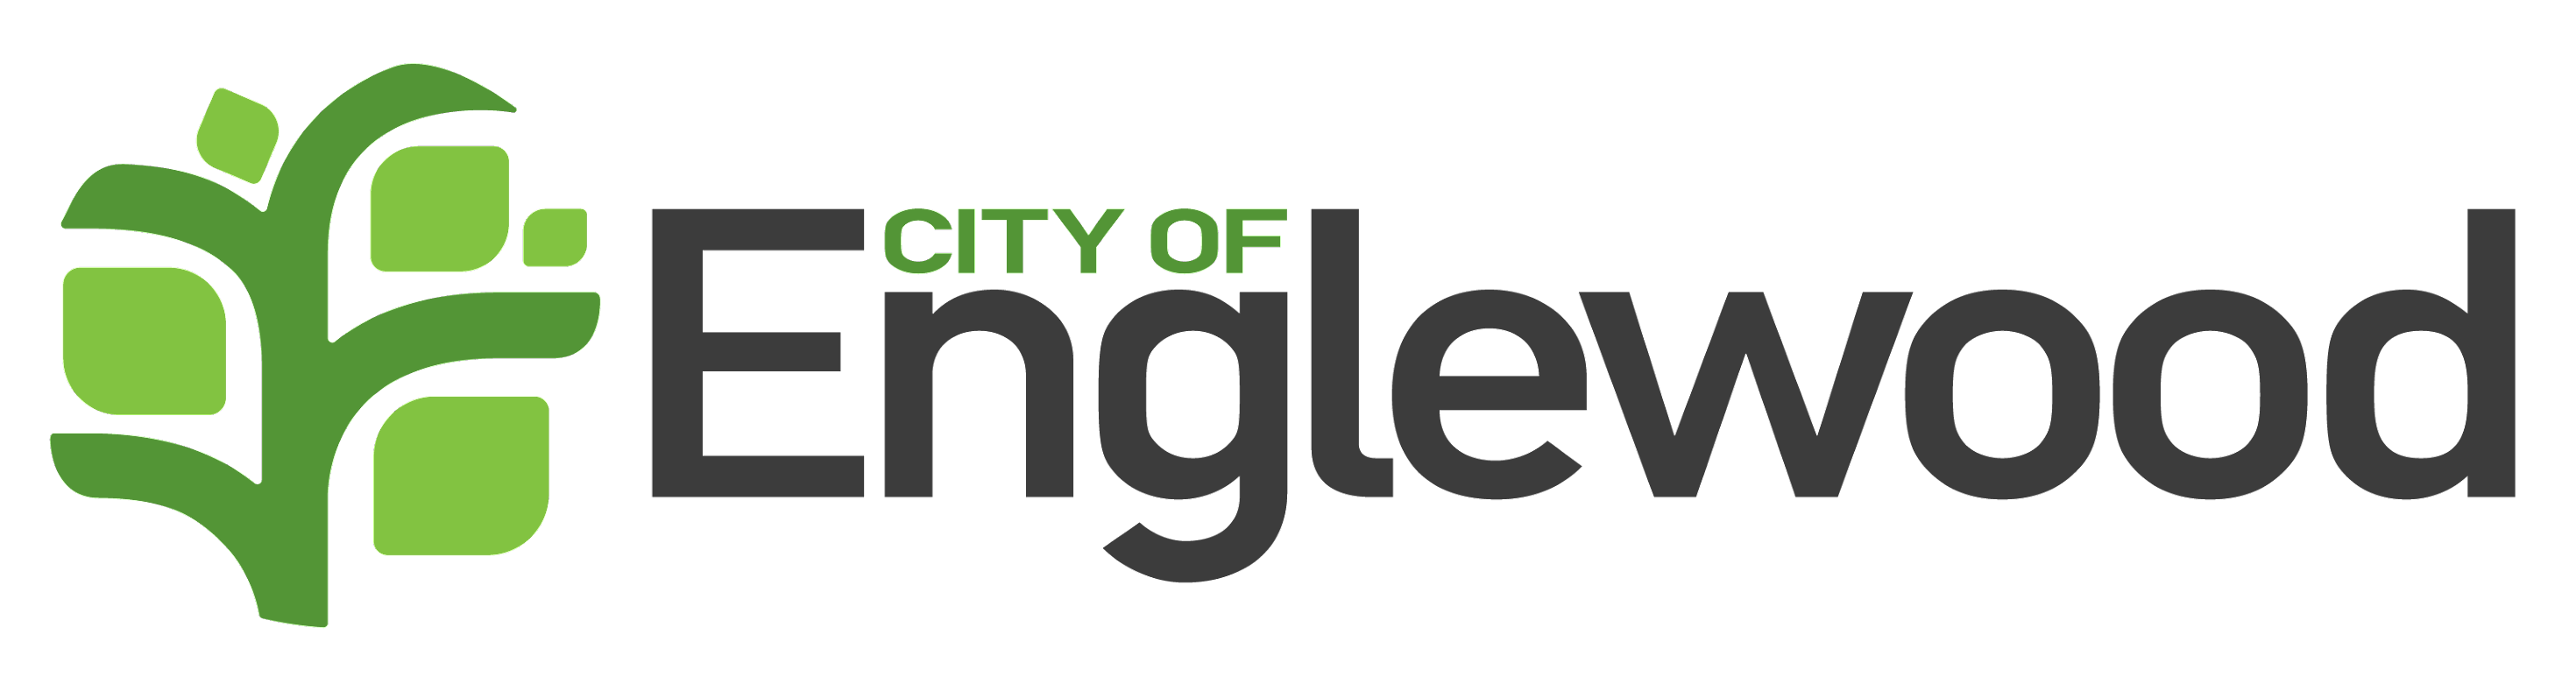 City of Englewood logo